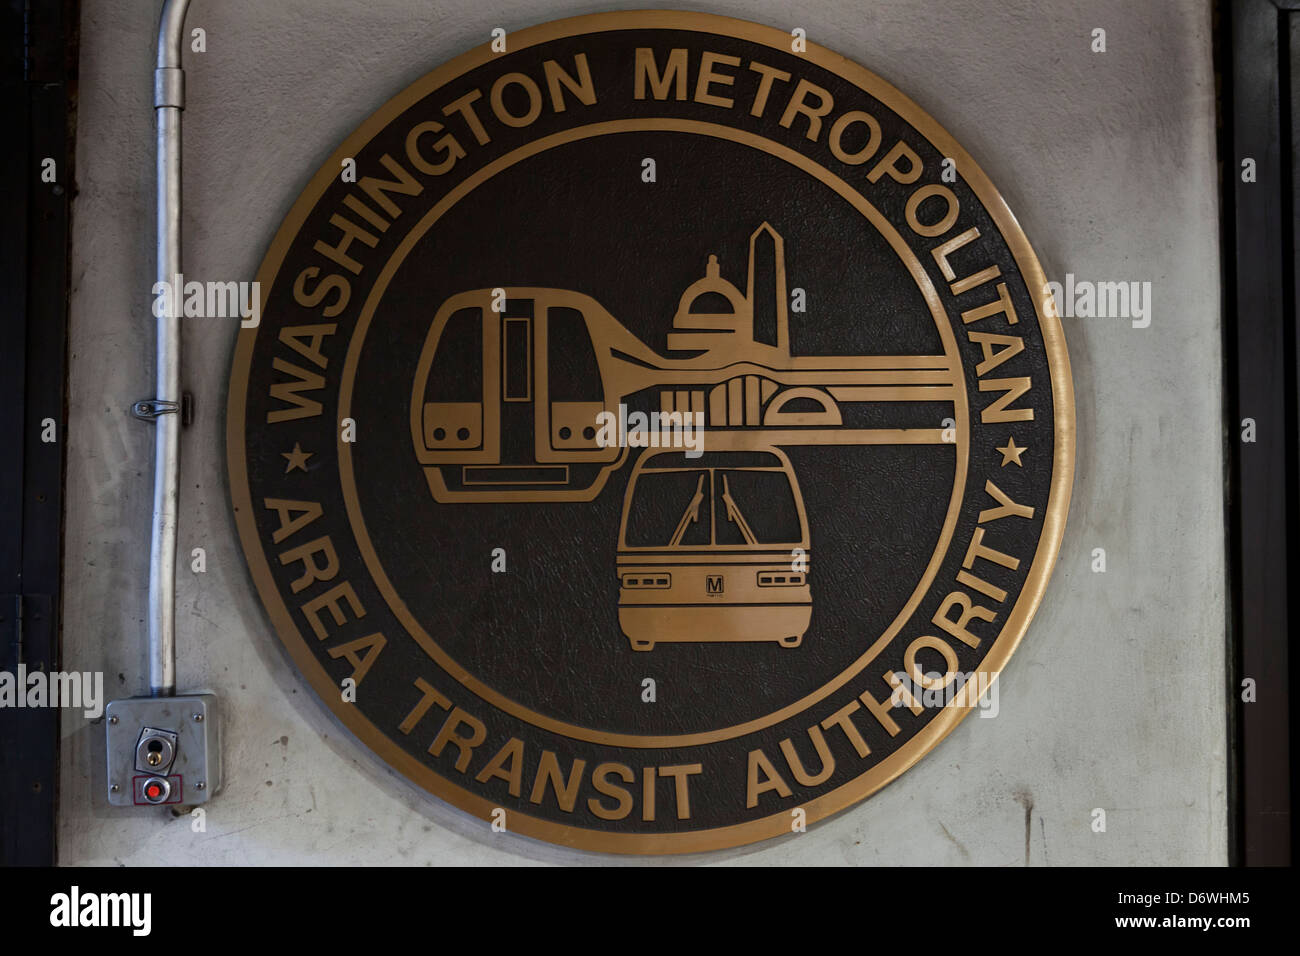 Washington Metropolitan Area Transit Authority seal Foto de stock